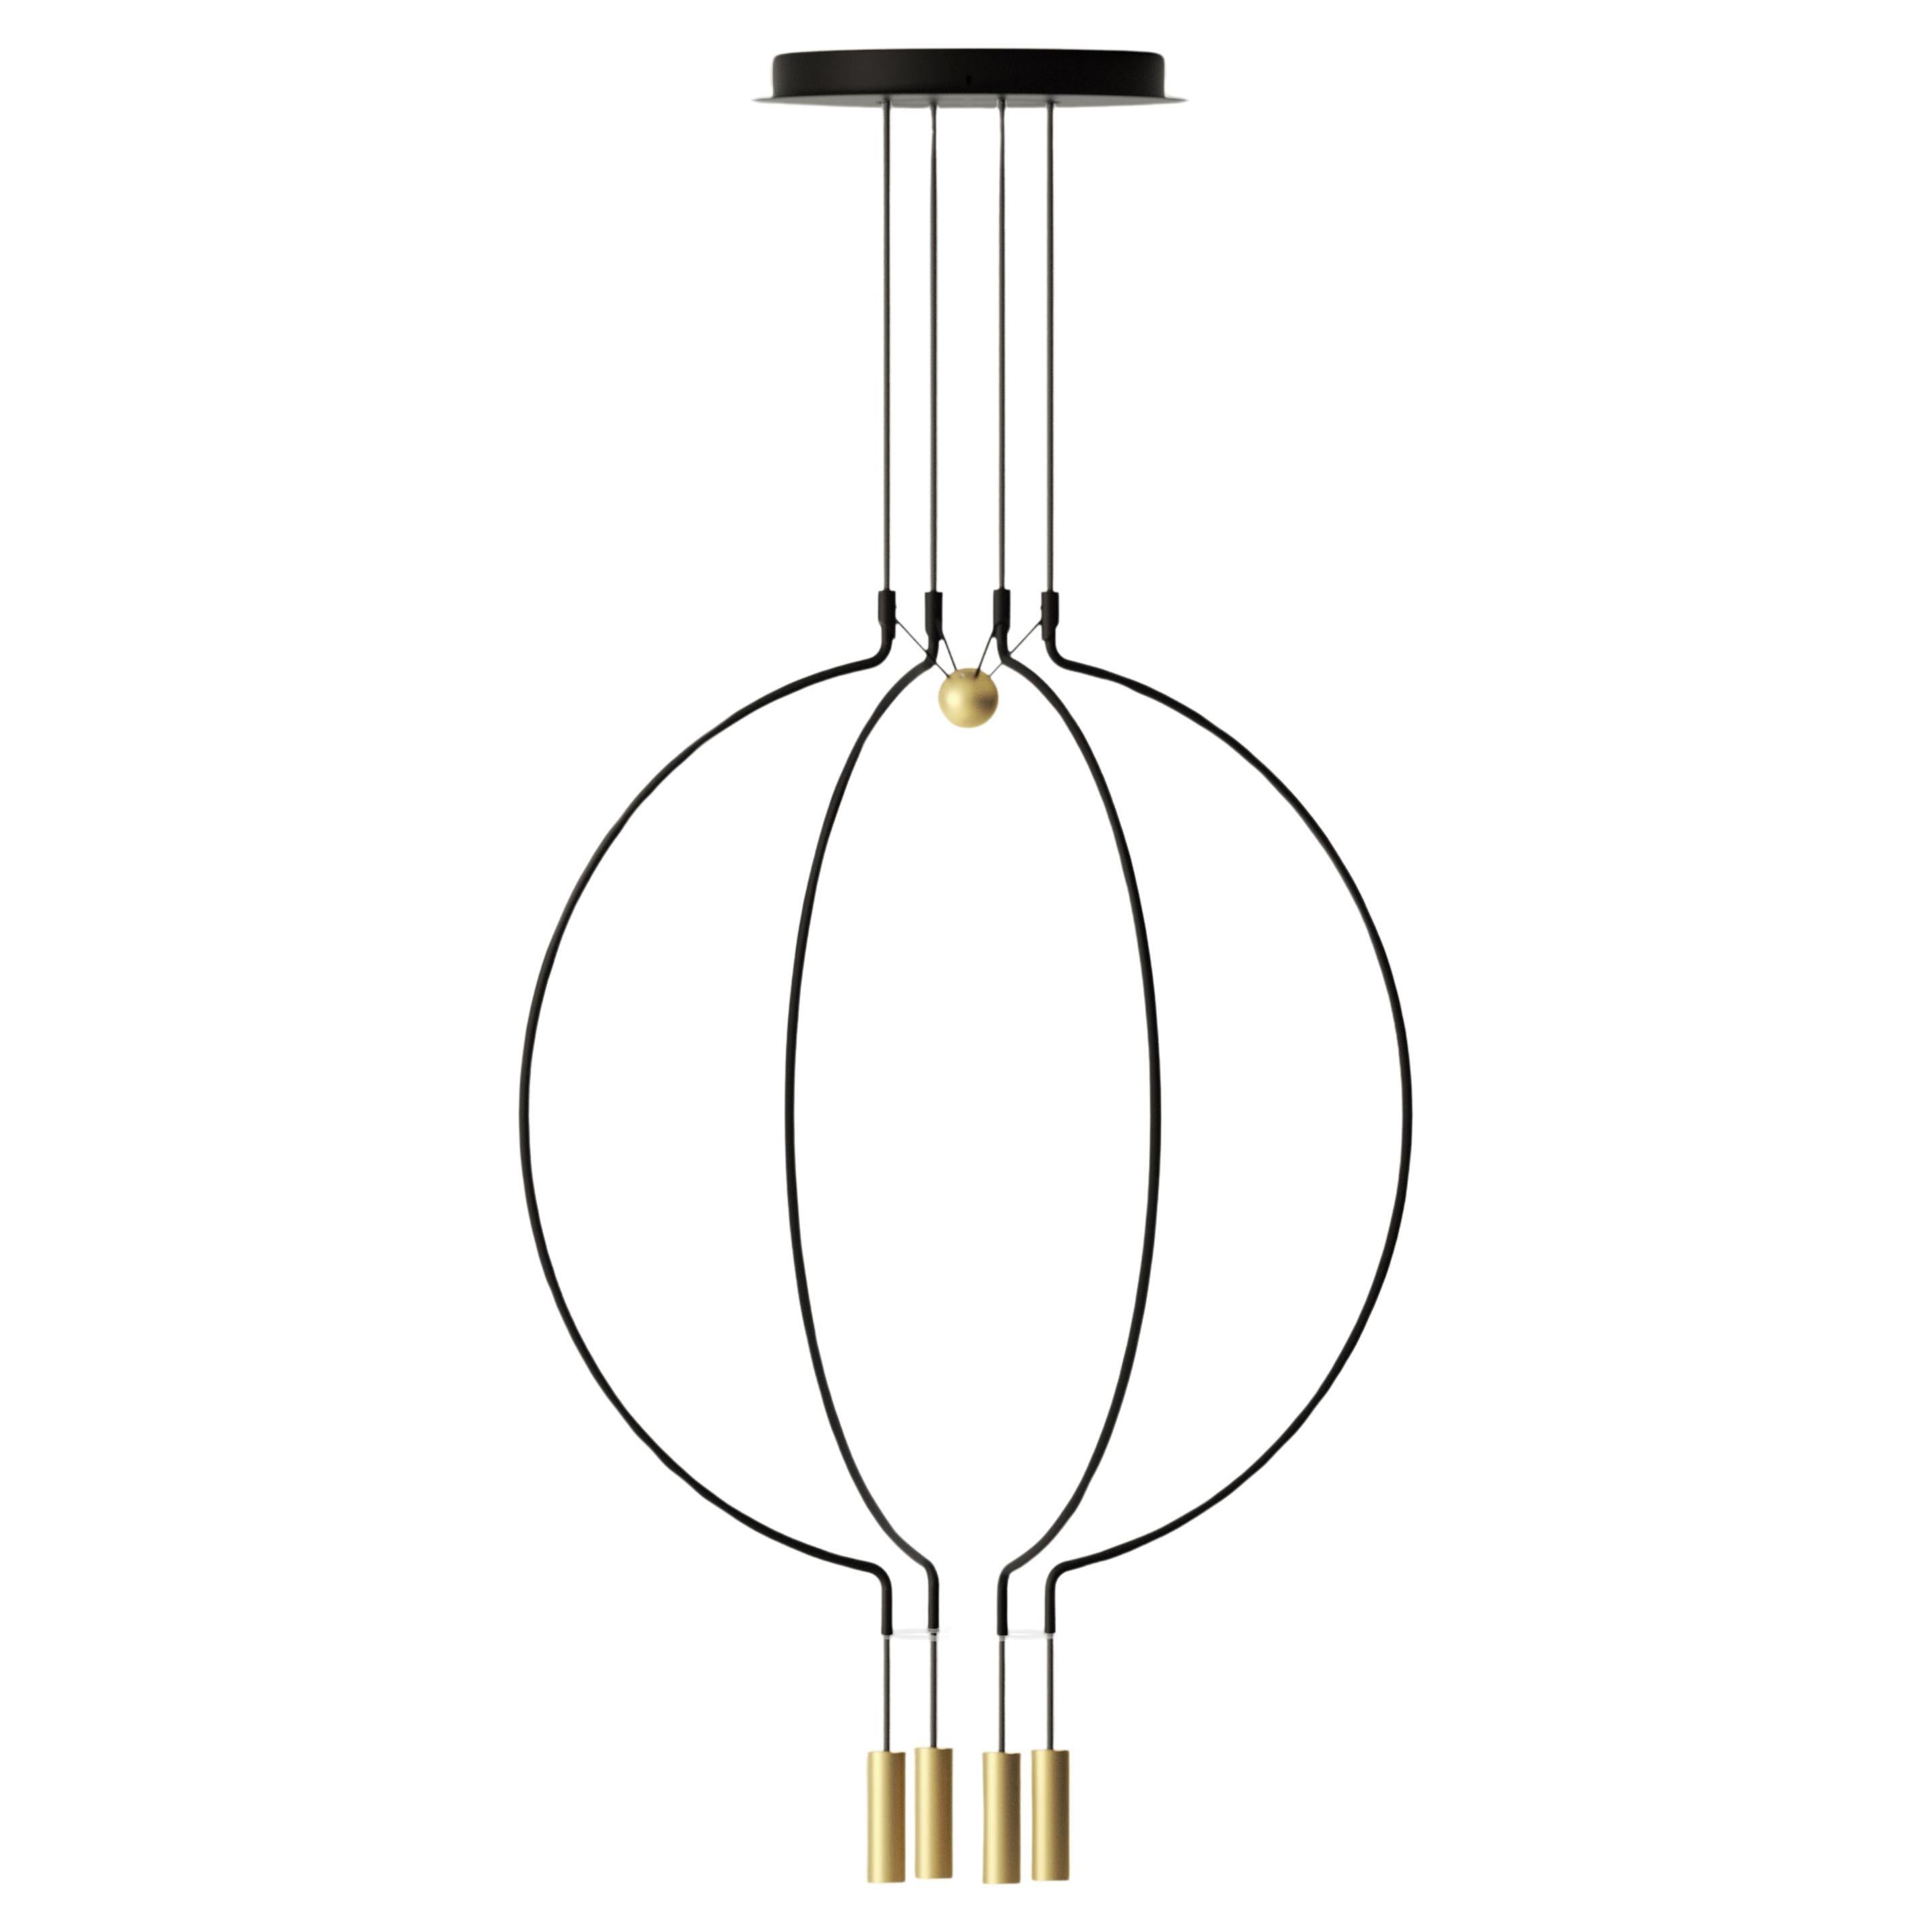 Axolight Liaison Model M4 Pendant Lamp in Black/Gold by Sara Moroni